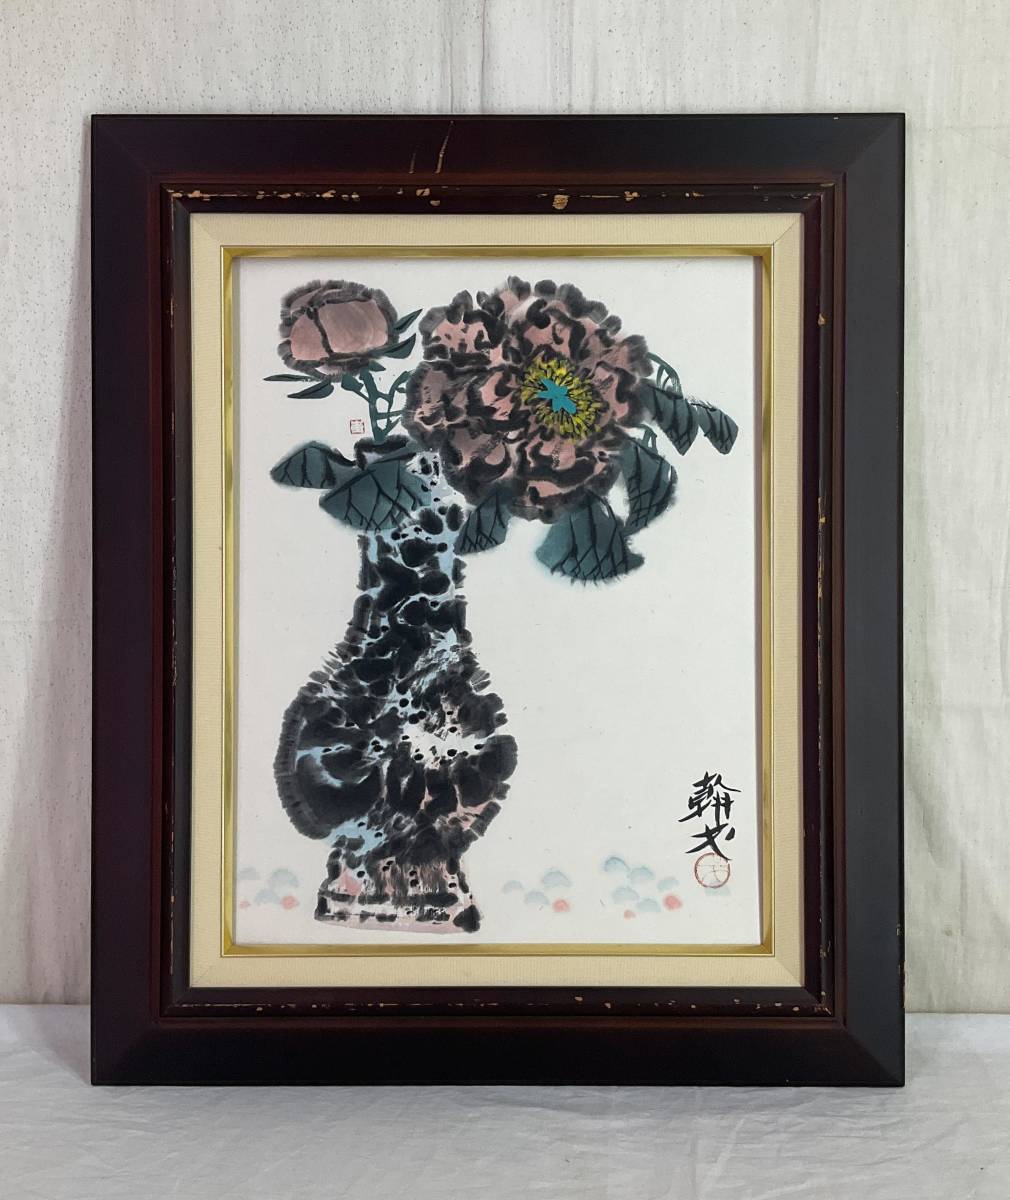 [प्रजनन] पेंटिंग: हान जी फूल, रंगीन कागज, फ़्रेम, चित्रकारी, झेजियांग प्रांत में जन्मे, चीन, कलाकृति, चित्रकारी, अन्य